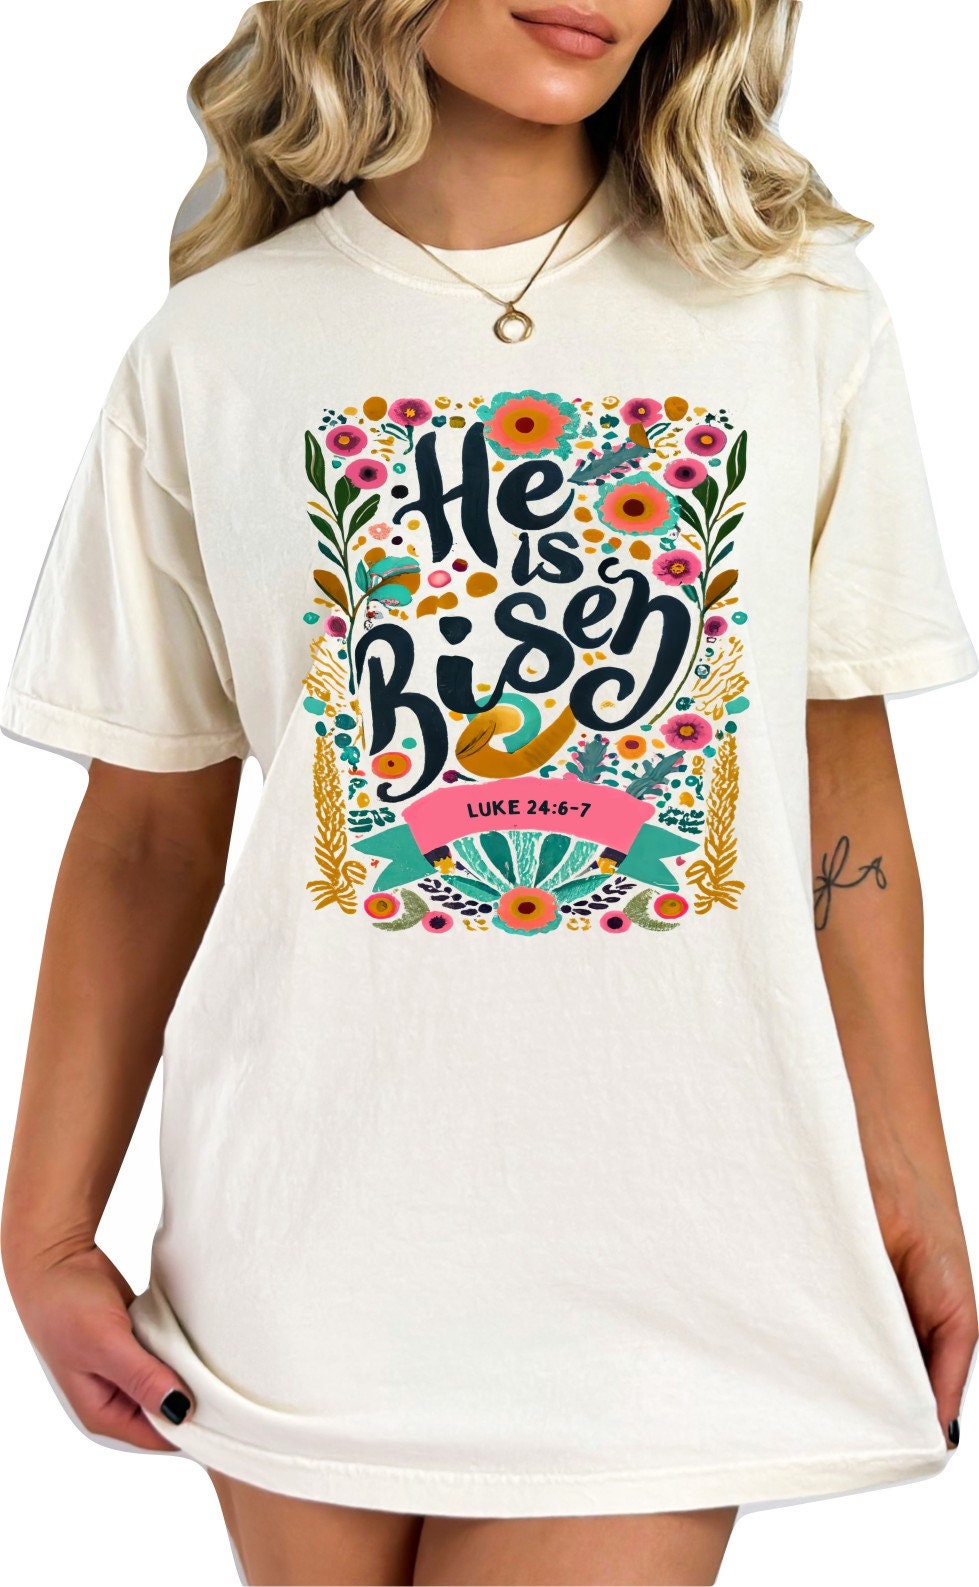 Christian Shirts Boho Christian Shirt Religious Tshirt Christian T Shirts Bible Verse Shirt He is Risen Floral Shirt